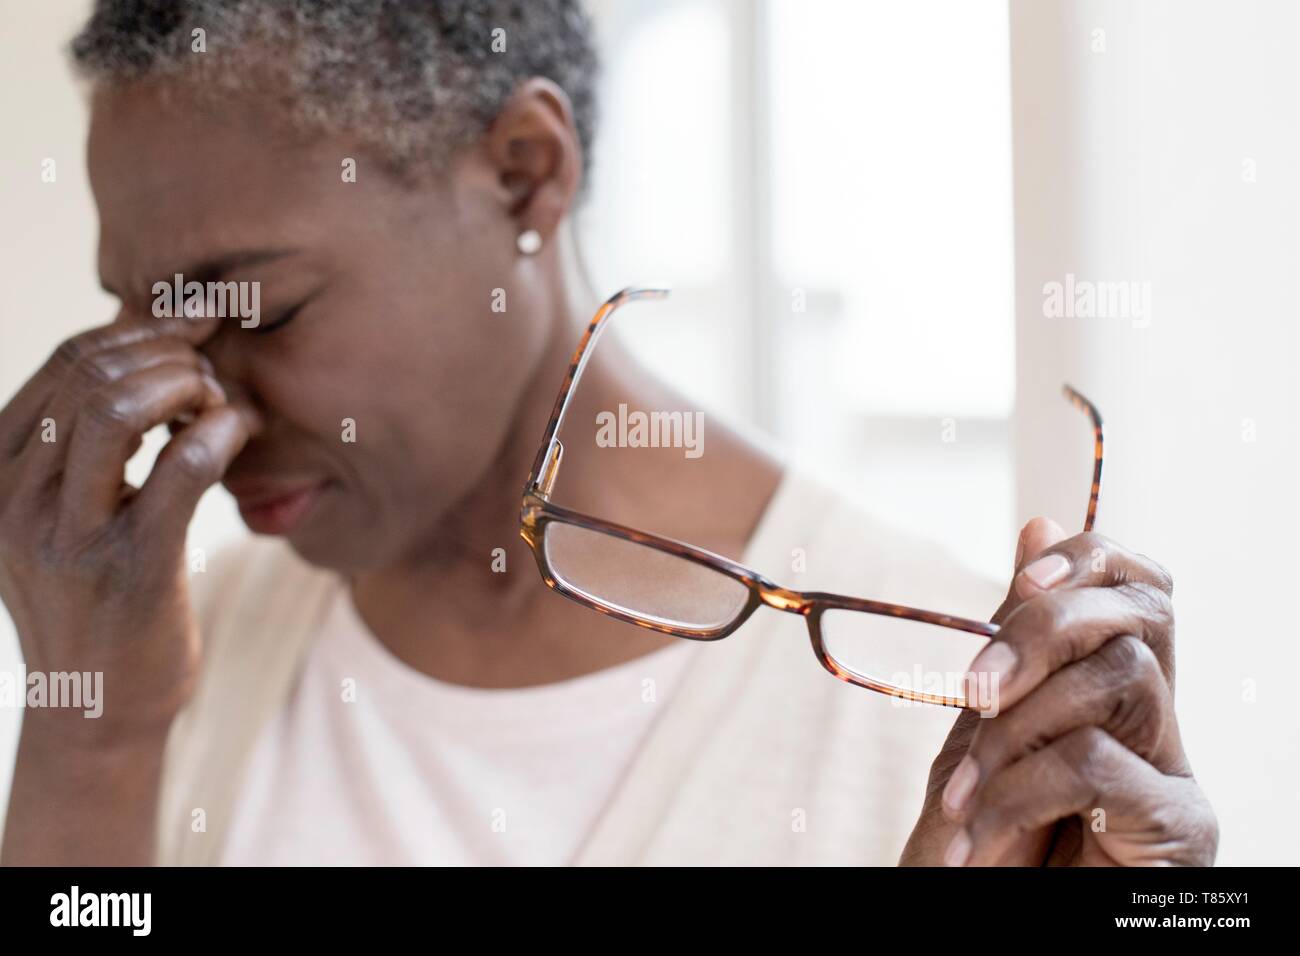 Frau berühren der Nasenrücken Stockfoto